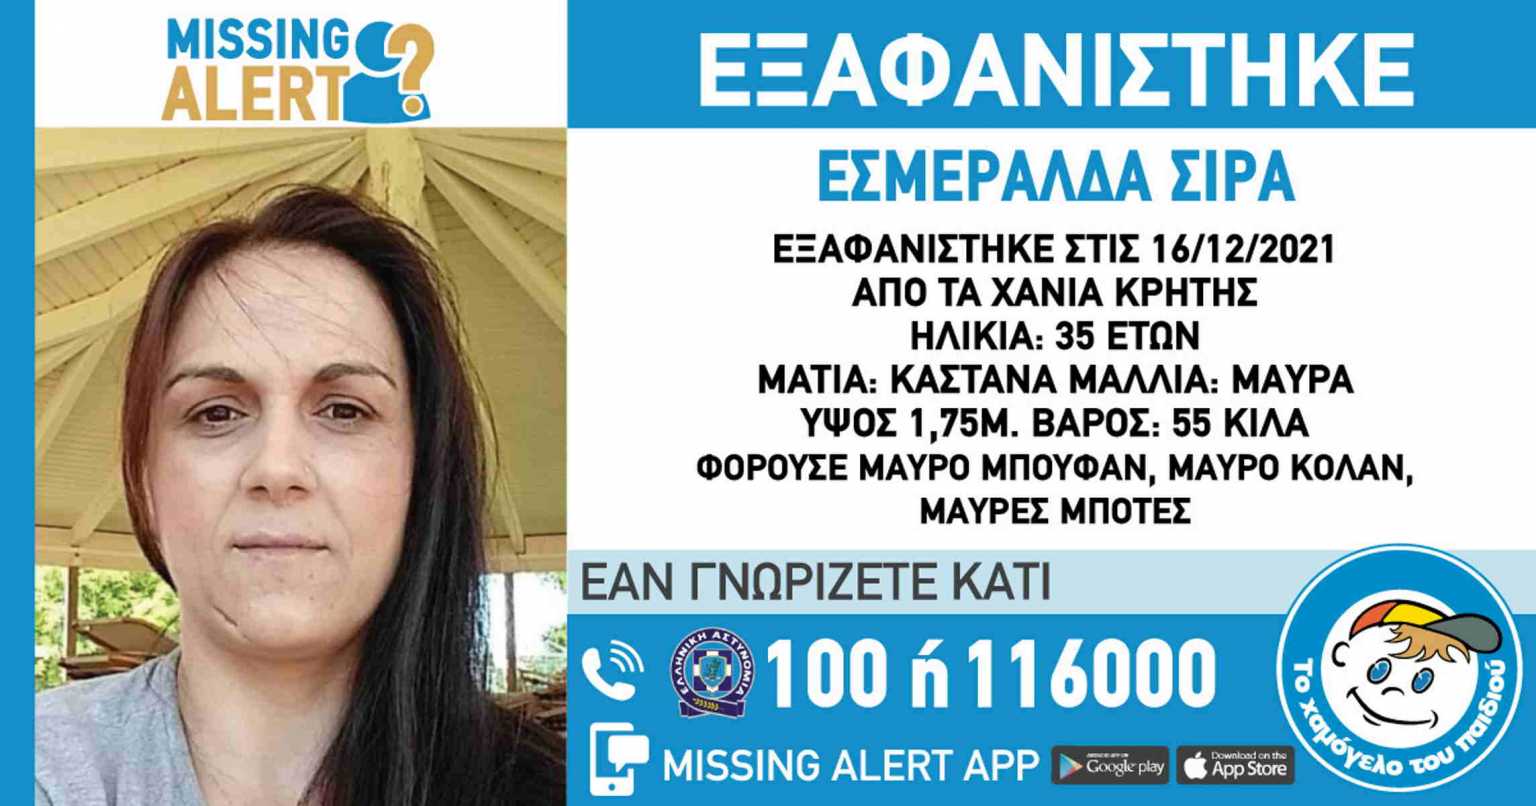 Missing Alert: Εξαφανίστηκε από τα Χανιά η 35χρονη Εσμεράλδα Σίρα